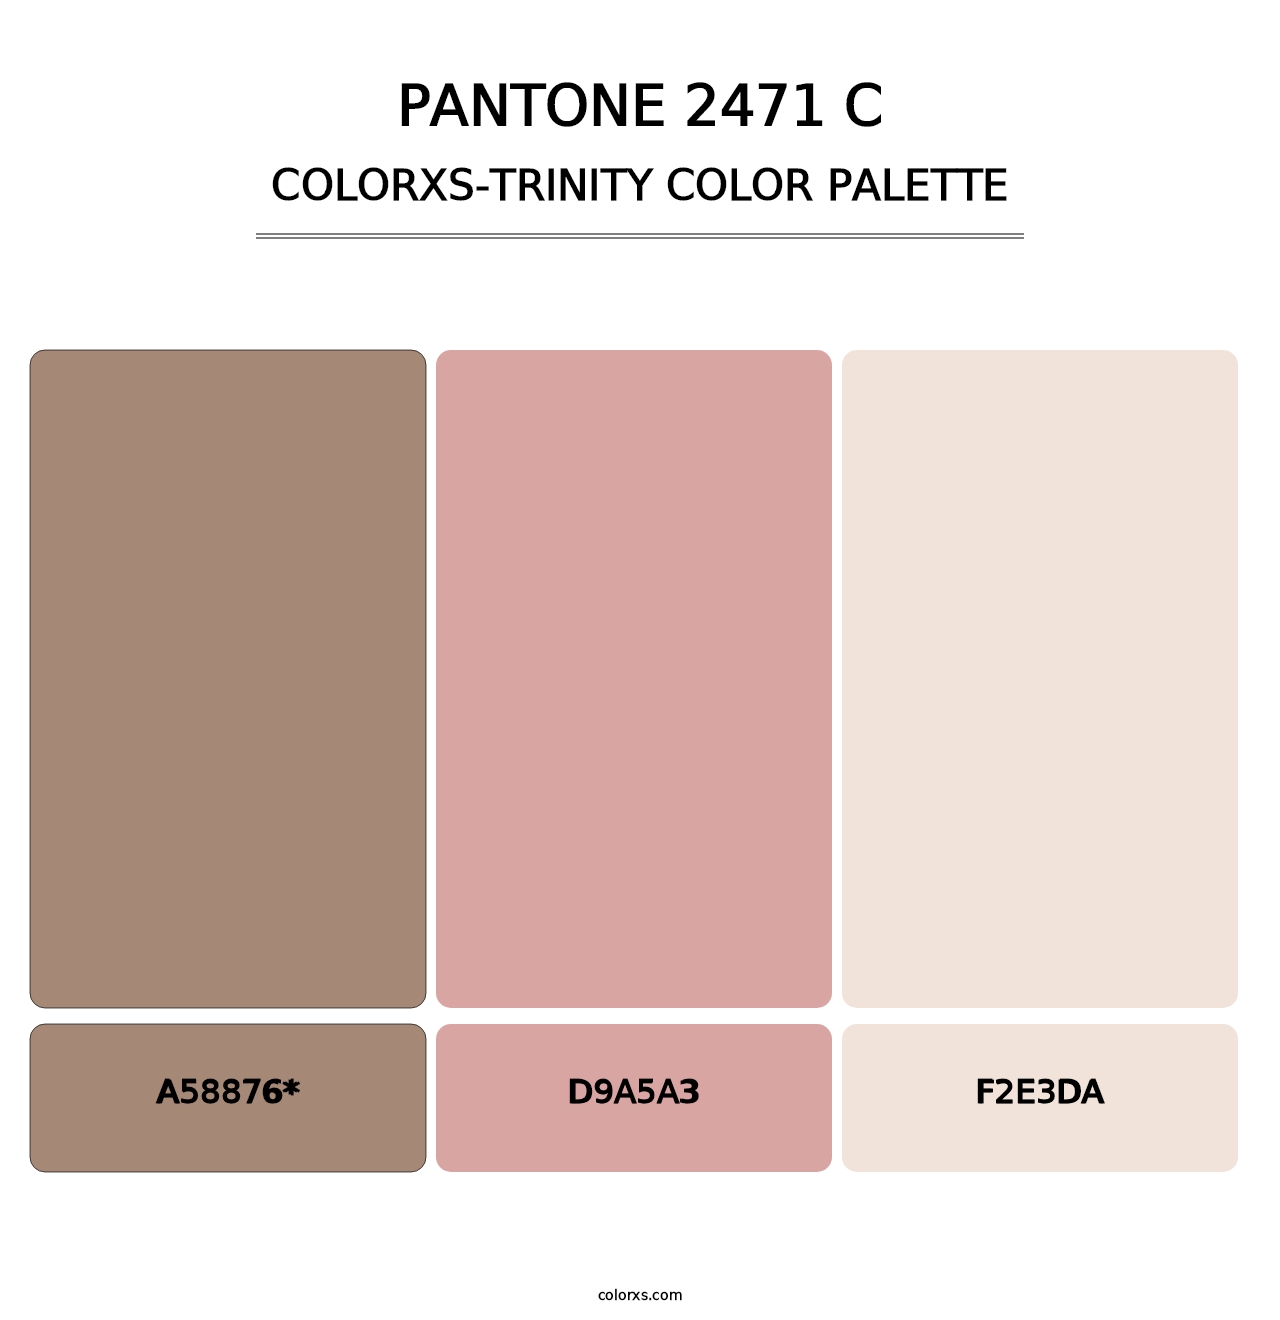 PANTONE 2471 C - Colorxs Trinity Palette